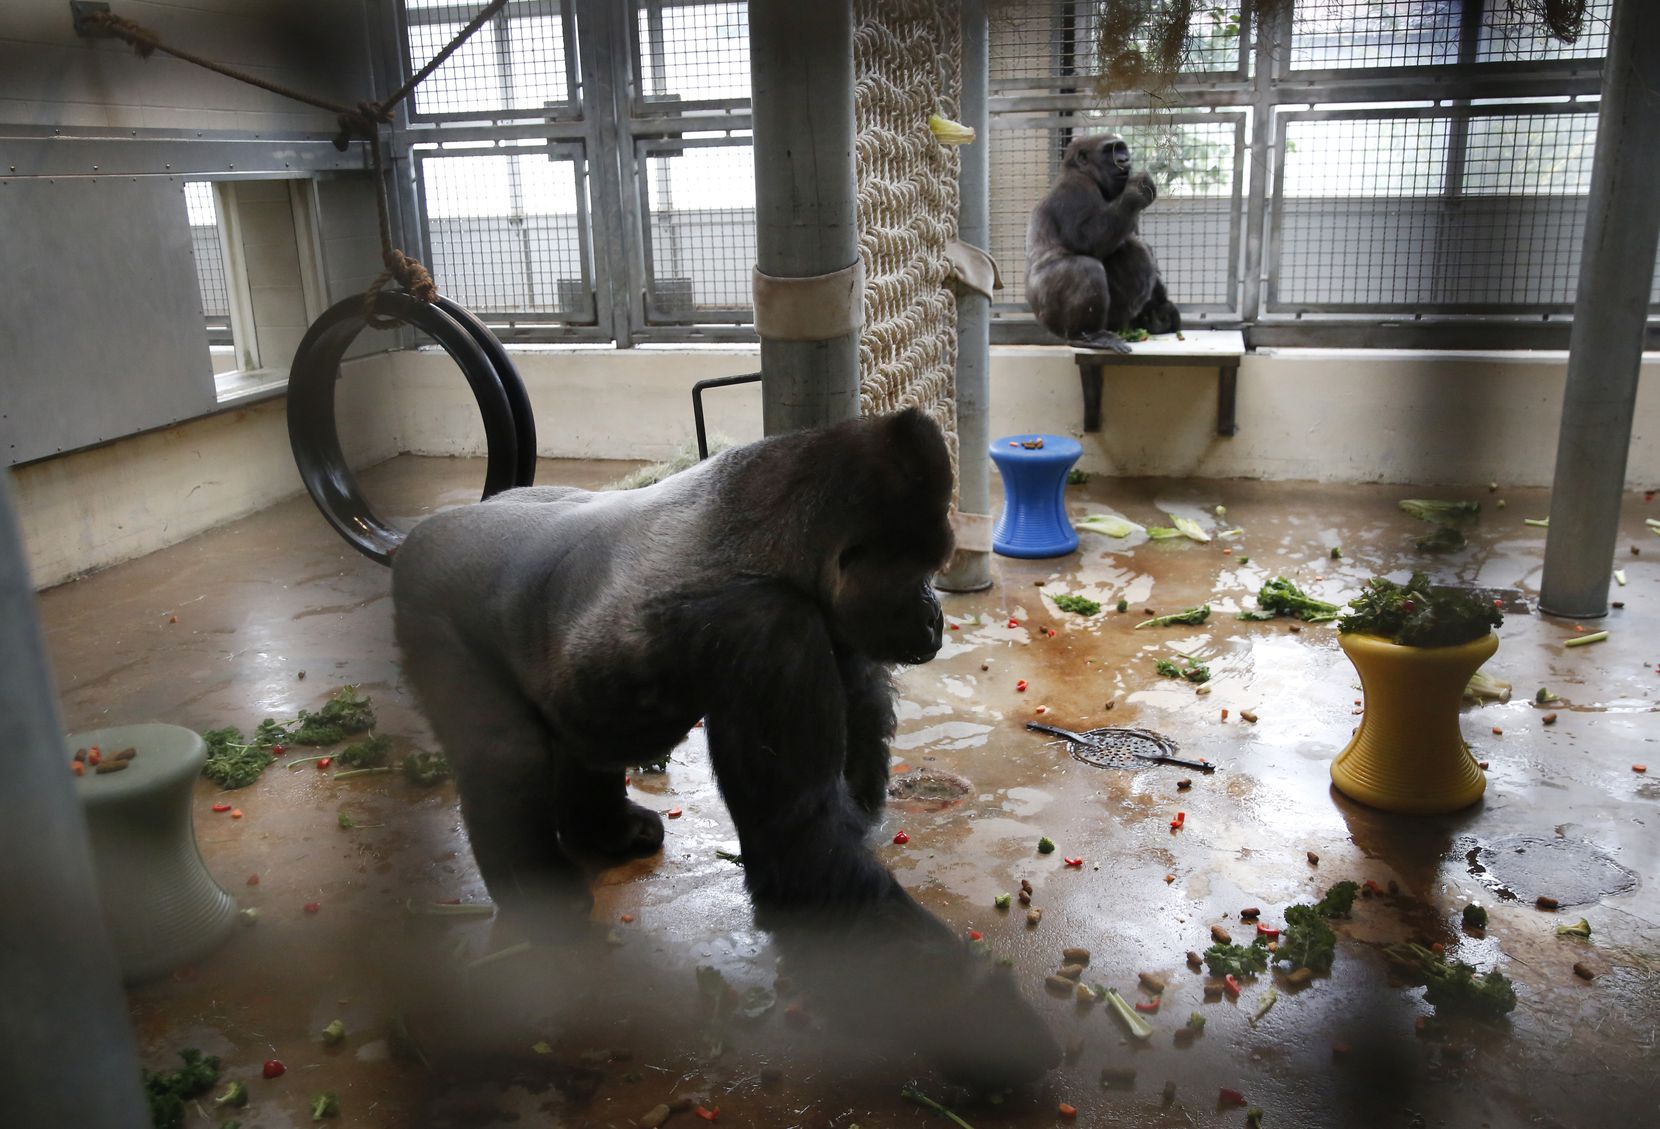 Subira, a silverback gorilla, walks across the heated behind-the-scenes gorilla building at the Dallas Zoo in 2019.